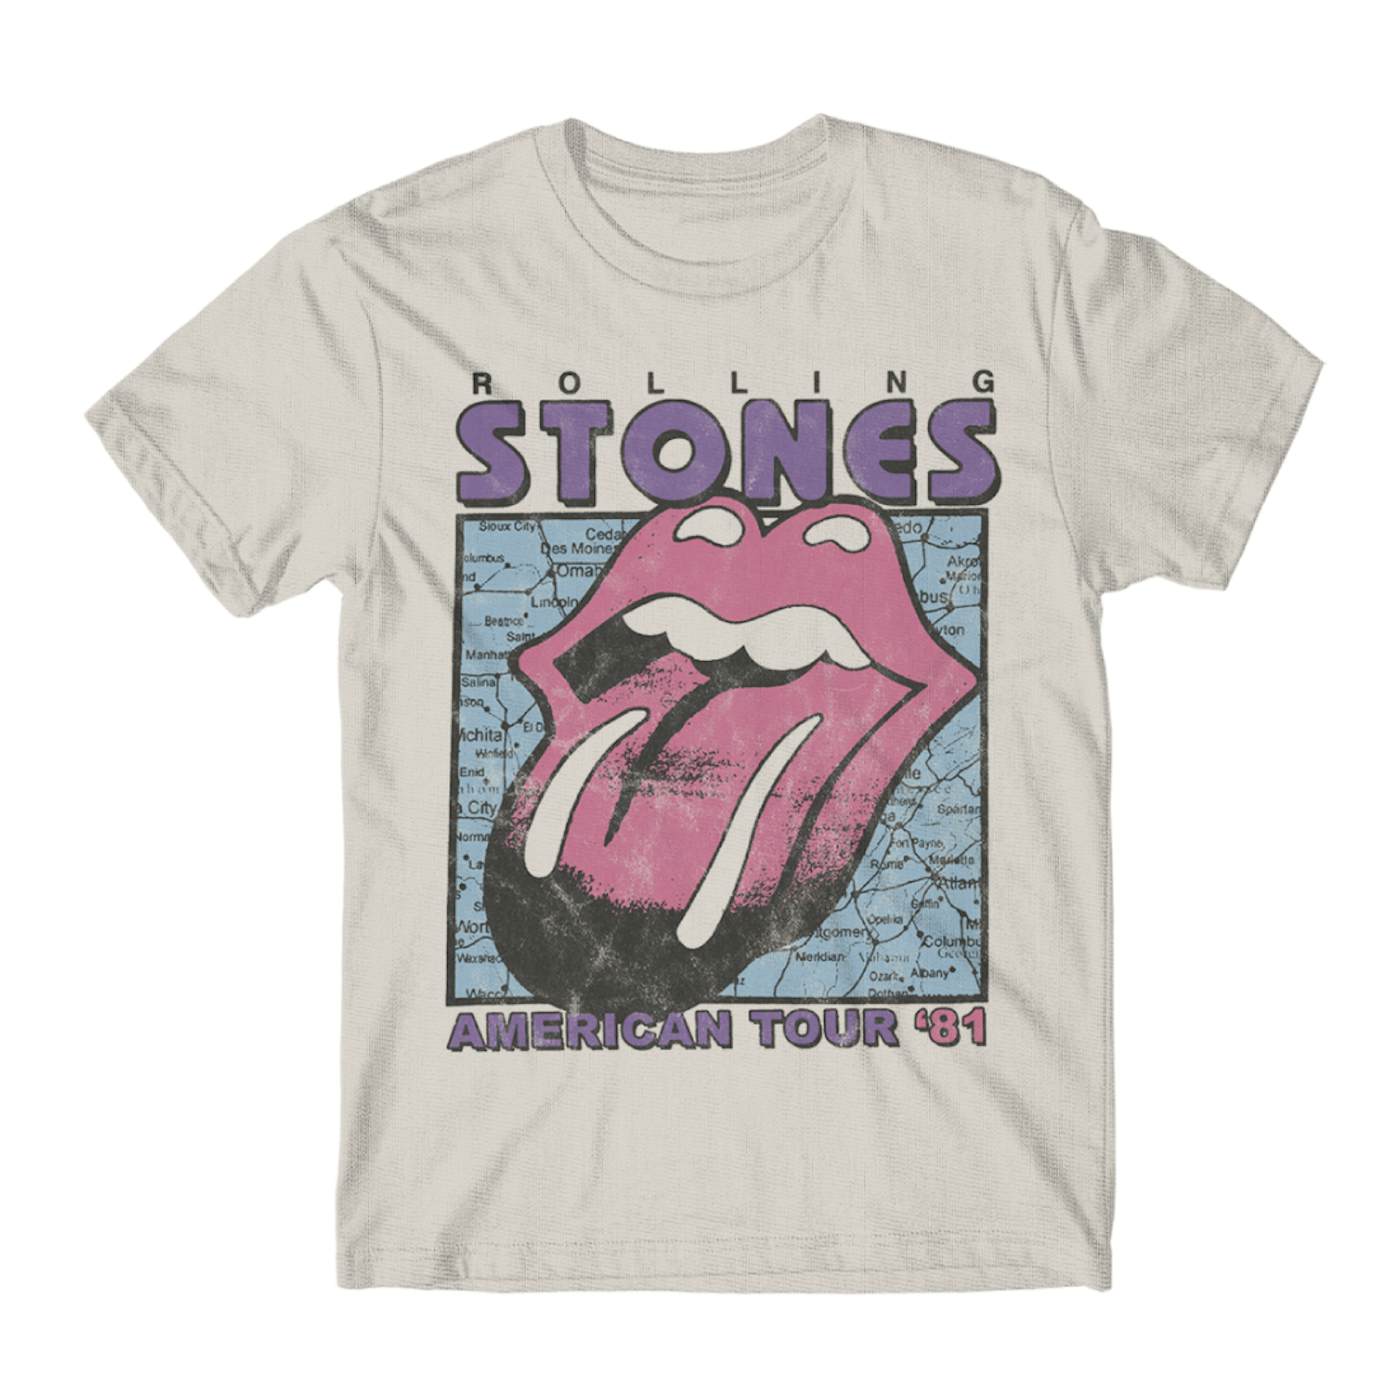 The Rolling Stones- T-Shirt - American Tour '81 (Bolur)